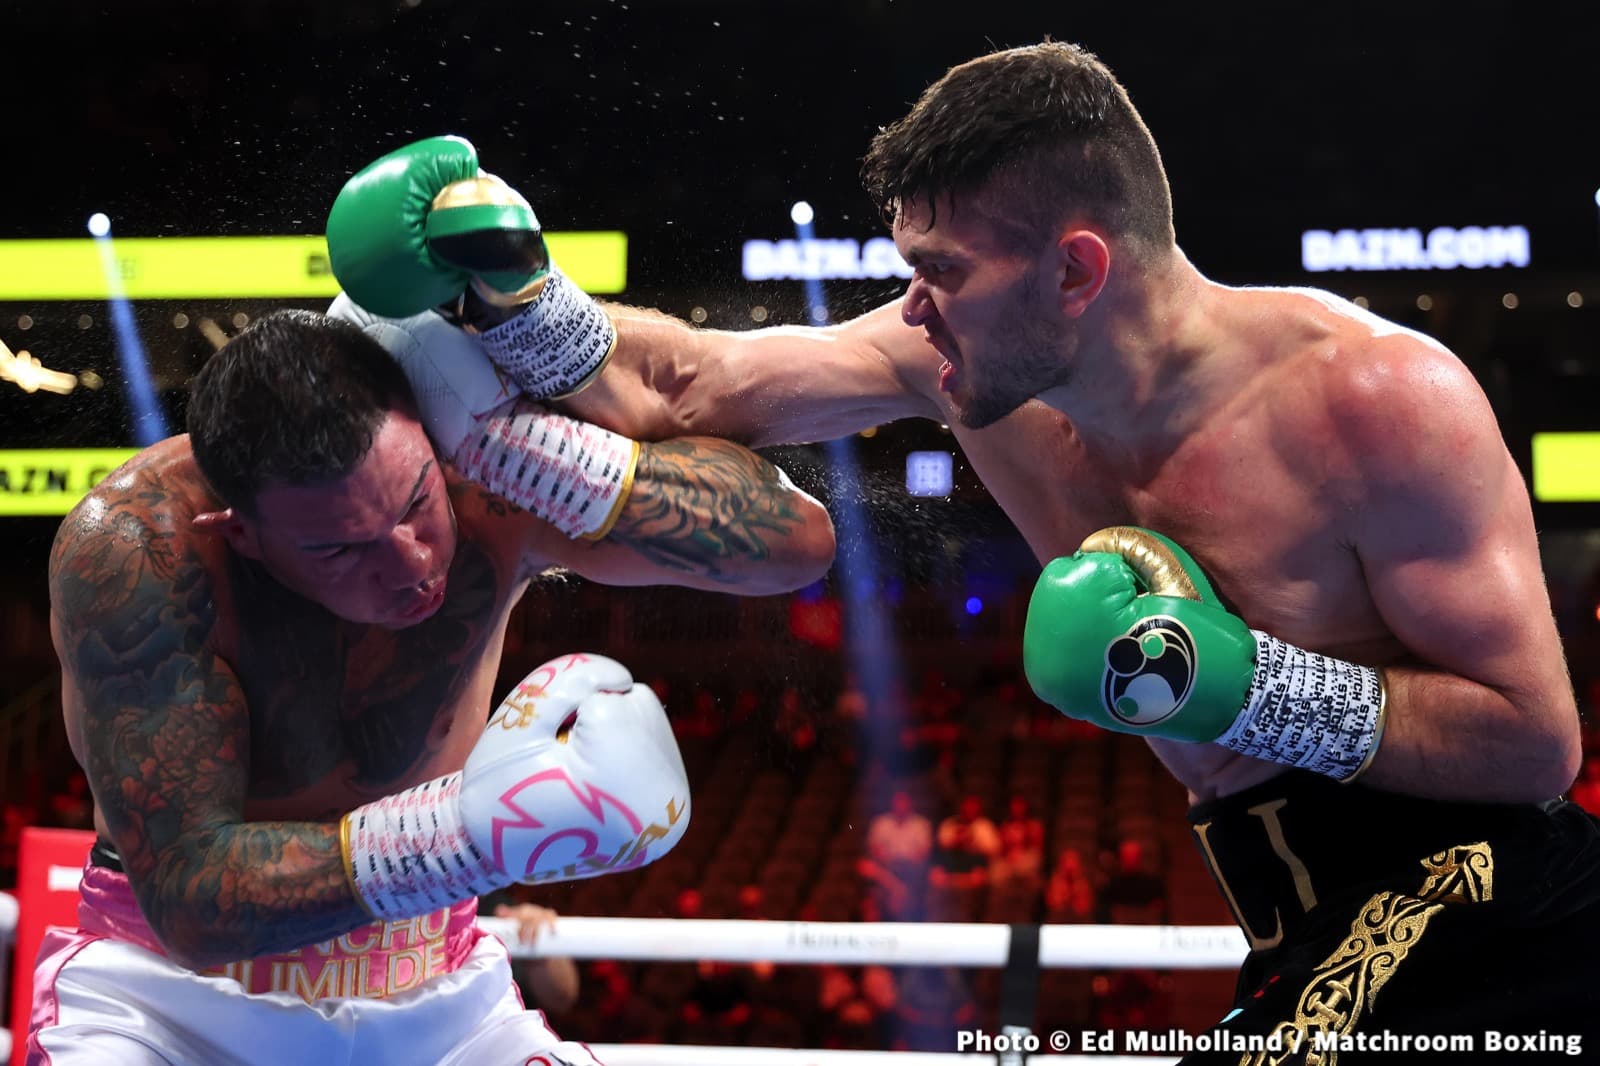 Canelo Alvarez vs. Gennadiy Golovkin - live action results for trilogy fight